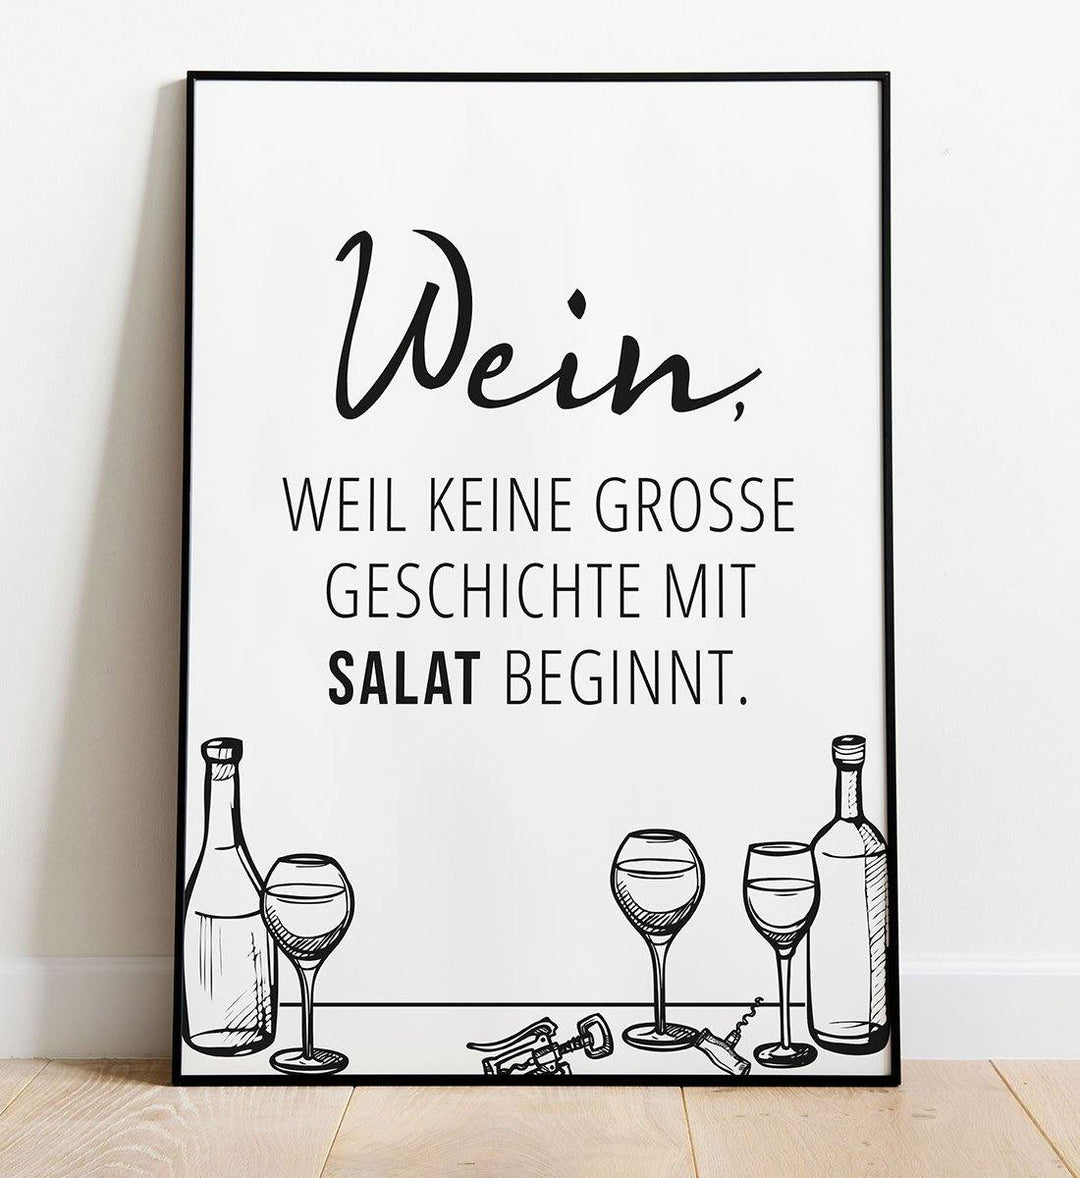 Wein statt Salat - Poster - WeinLIEBLING